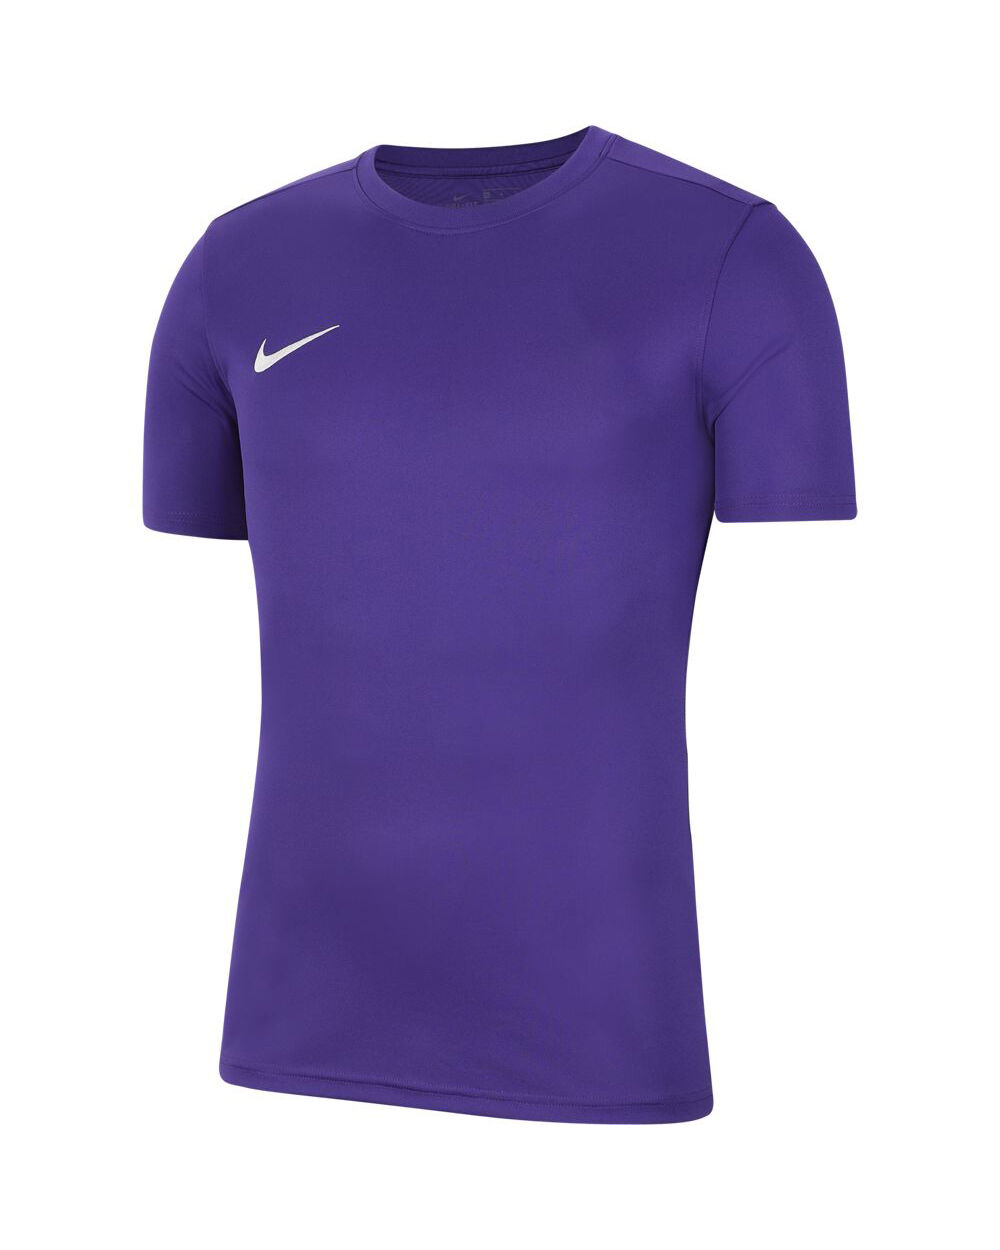 Camiseta Nike Park VII Violeta para Hombre - BV6708-547